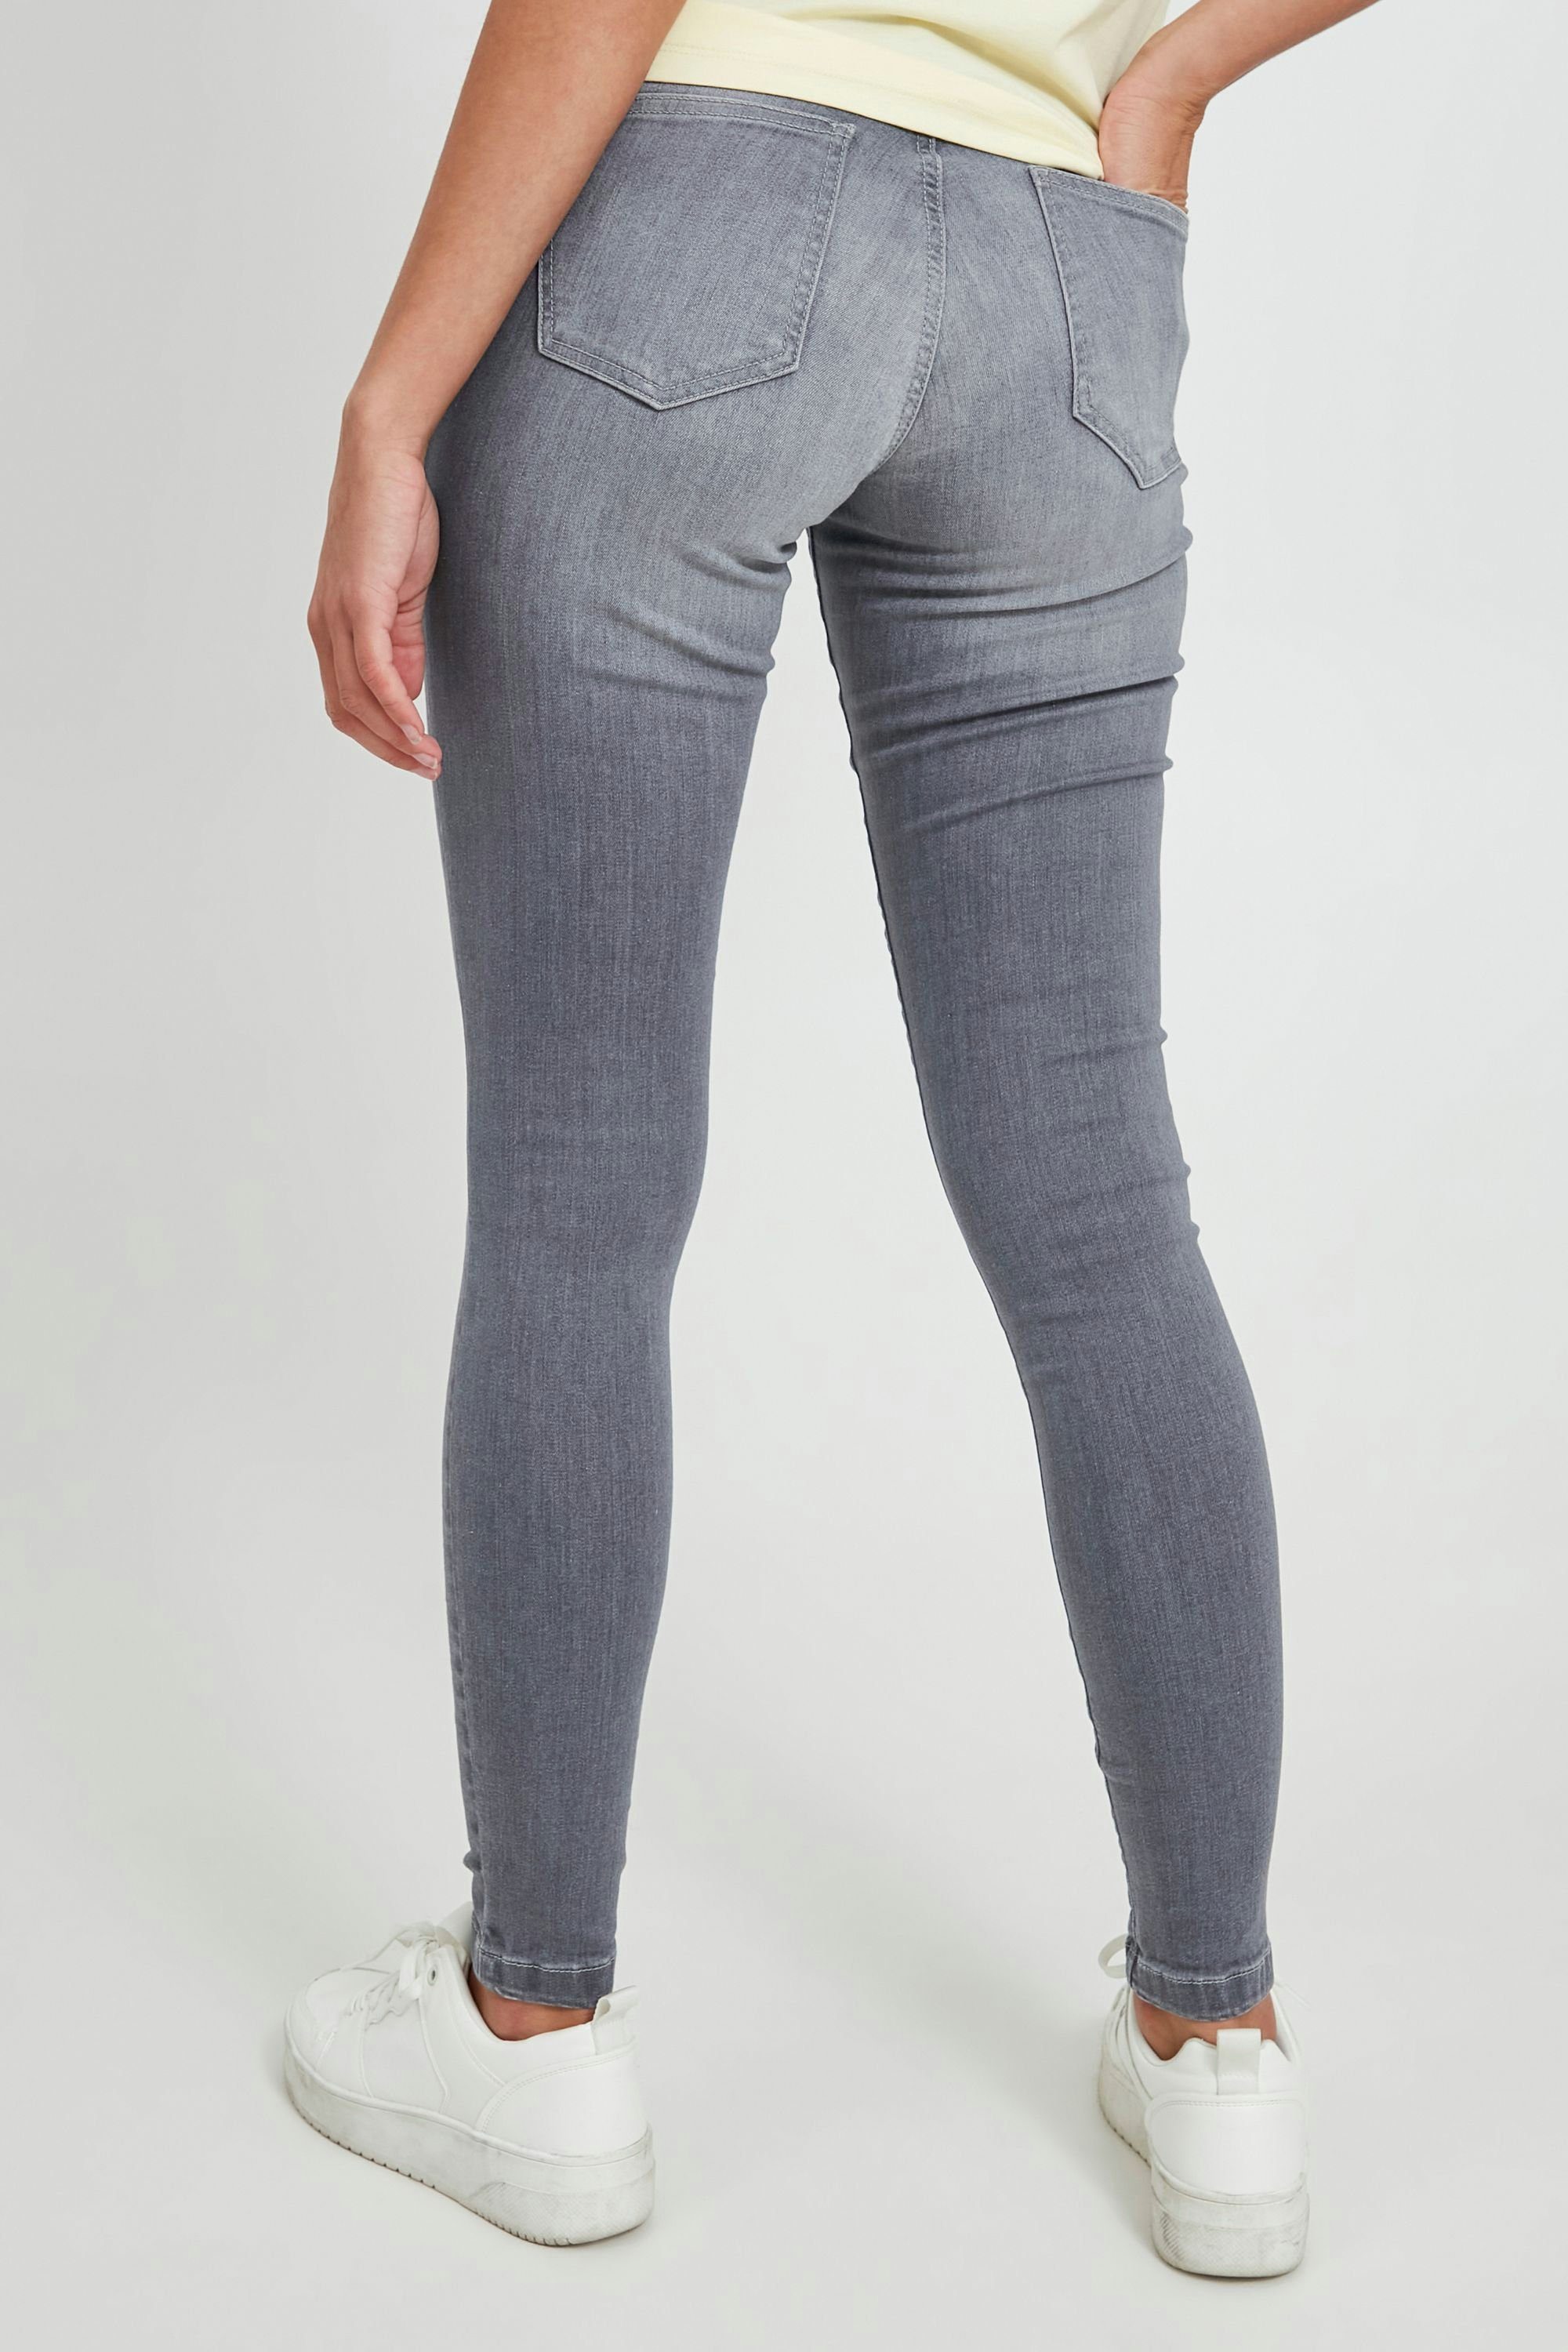 jeans Skinny-fit-Jeans Grey (200463) Light Luni 20803214 b.young BYLola - Denim